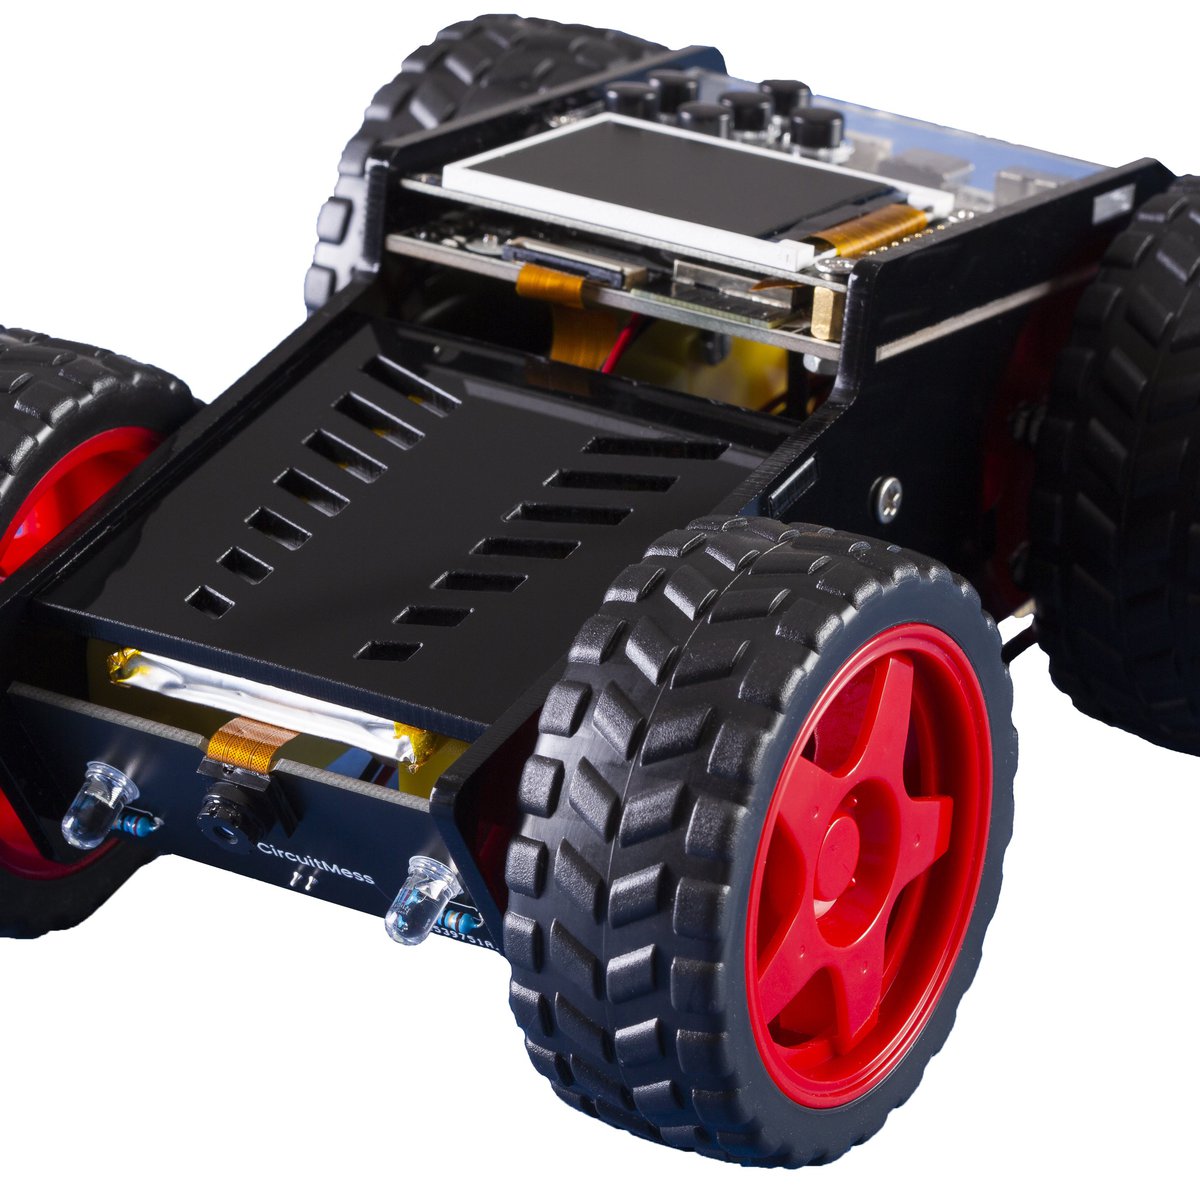 CircuitMess Wheelson - A DIY Self-Driving Car Kit from CircuitMess on Tindie